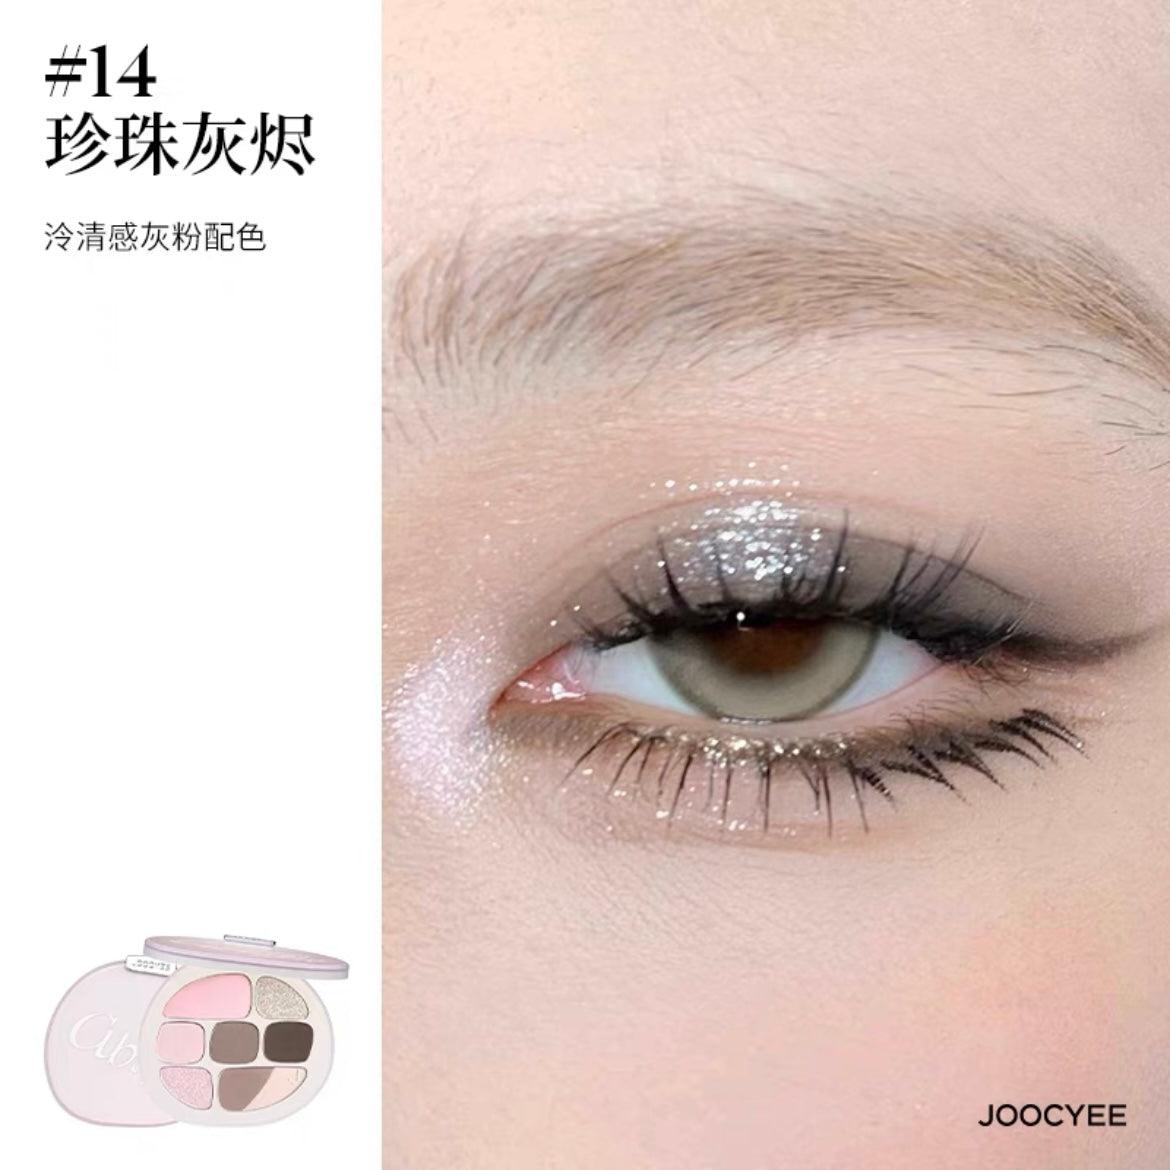 【NEW! #14】Joocyee Tortoise Shell Multi Color Eyeshadow JC003 - Chic Decent